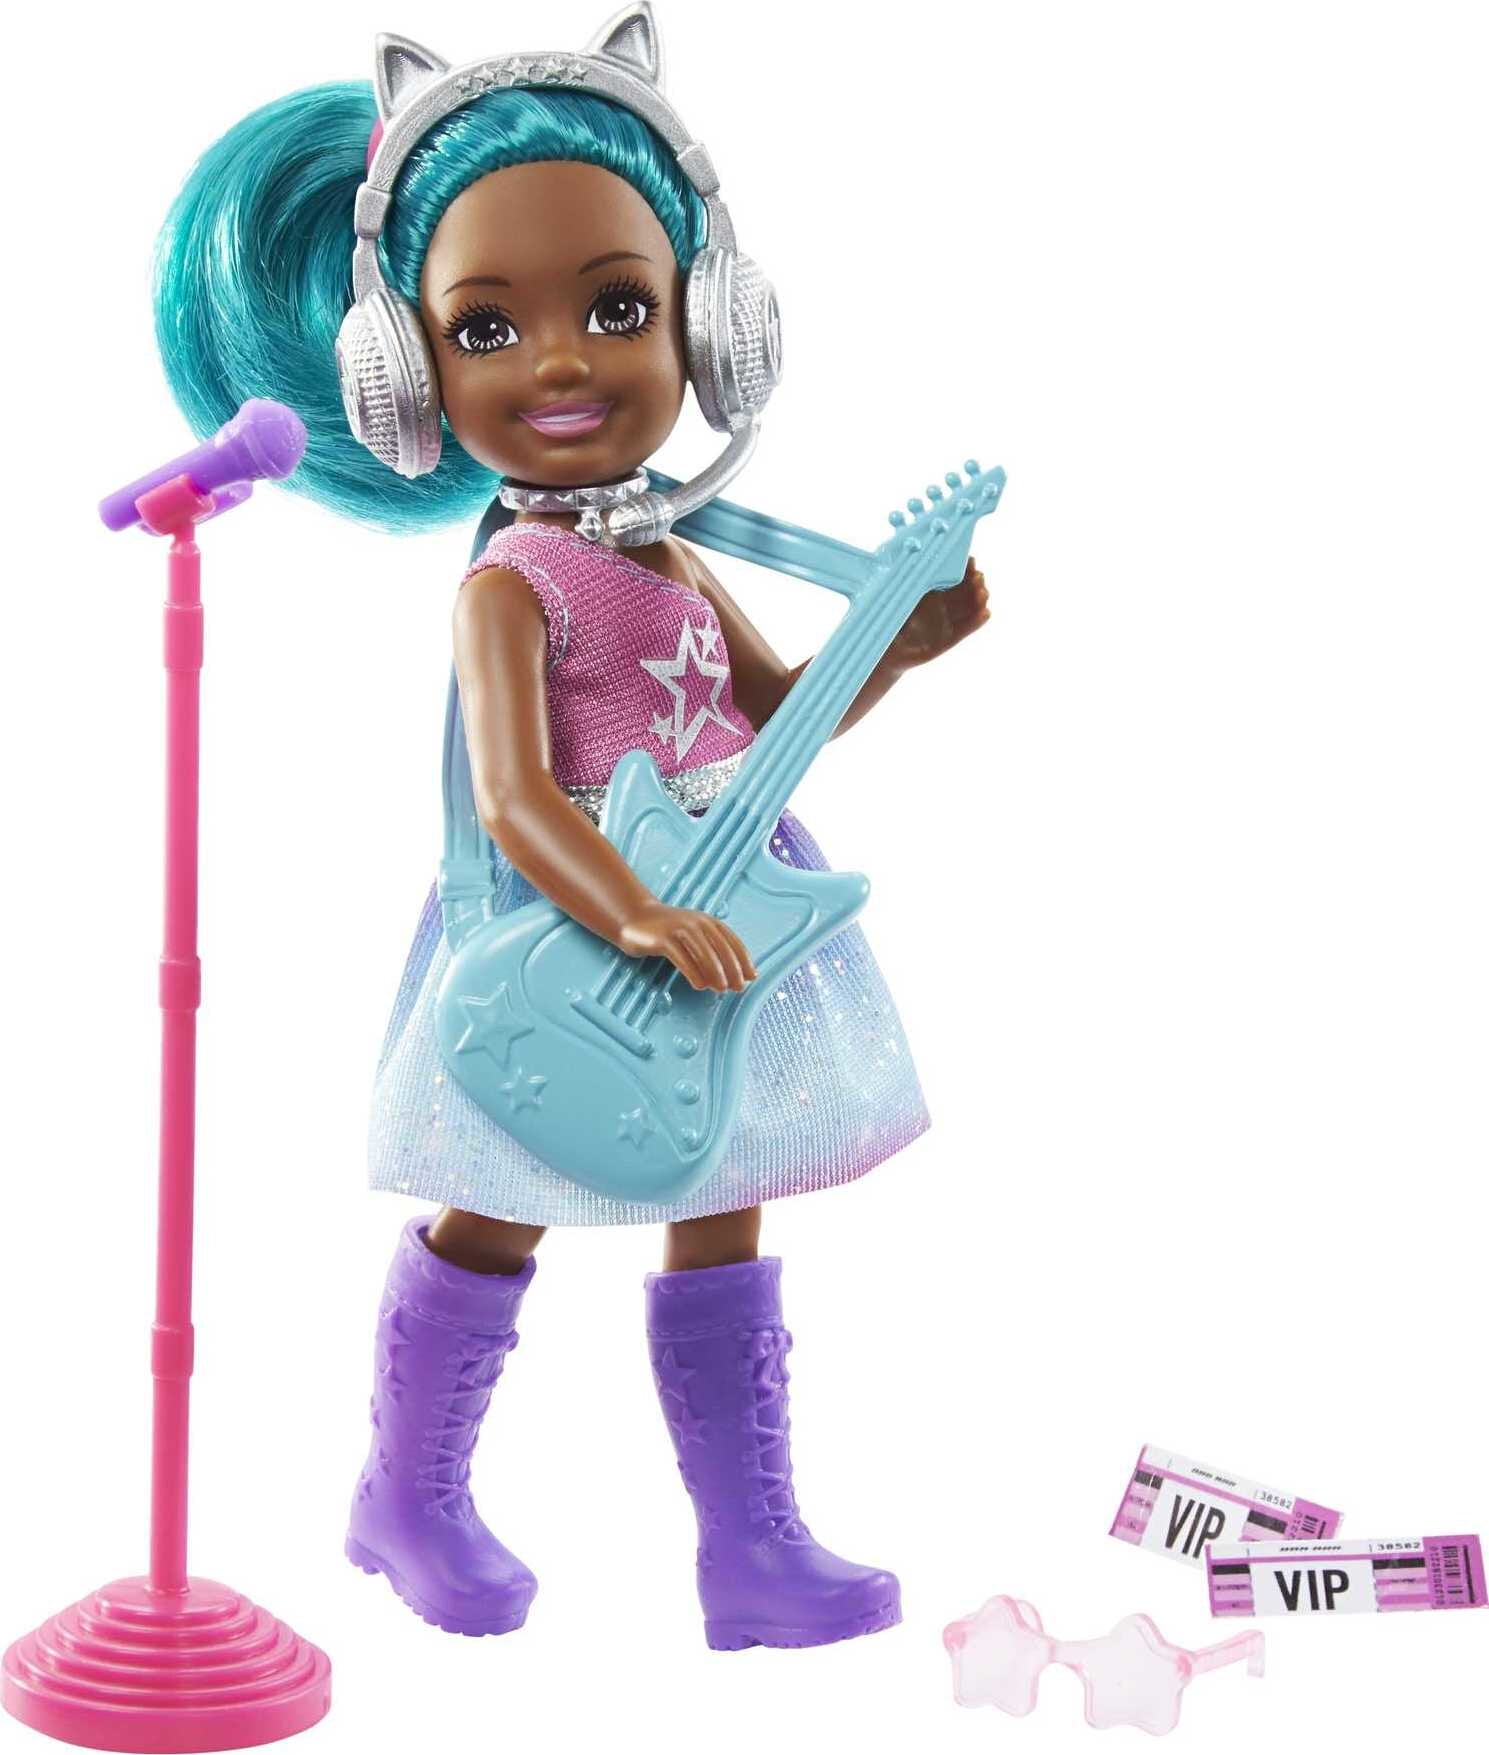 New Hybrid: VIP Pets head on Barbie Extra and Rainbow High Body. : r/Dolls